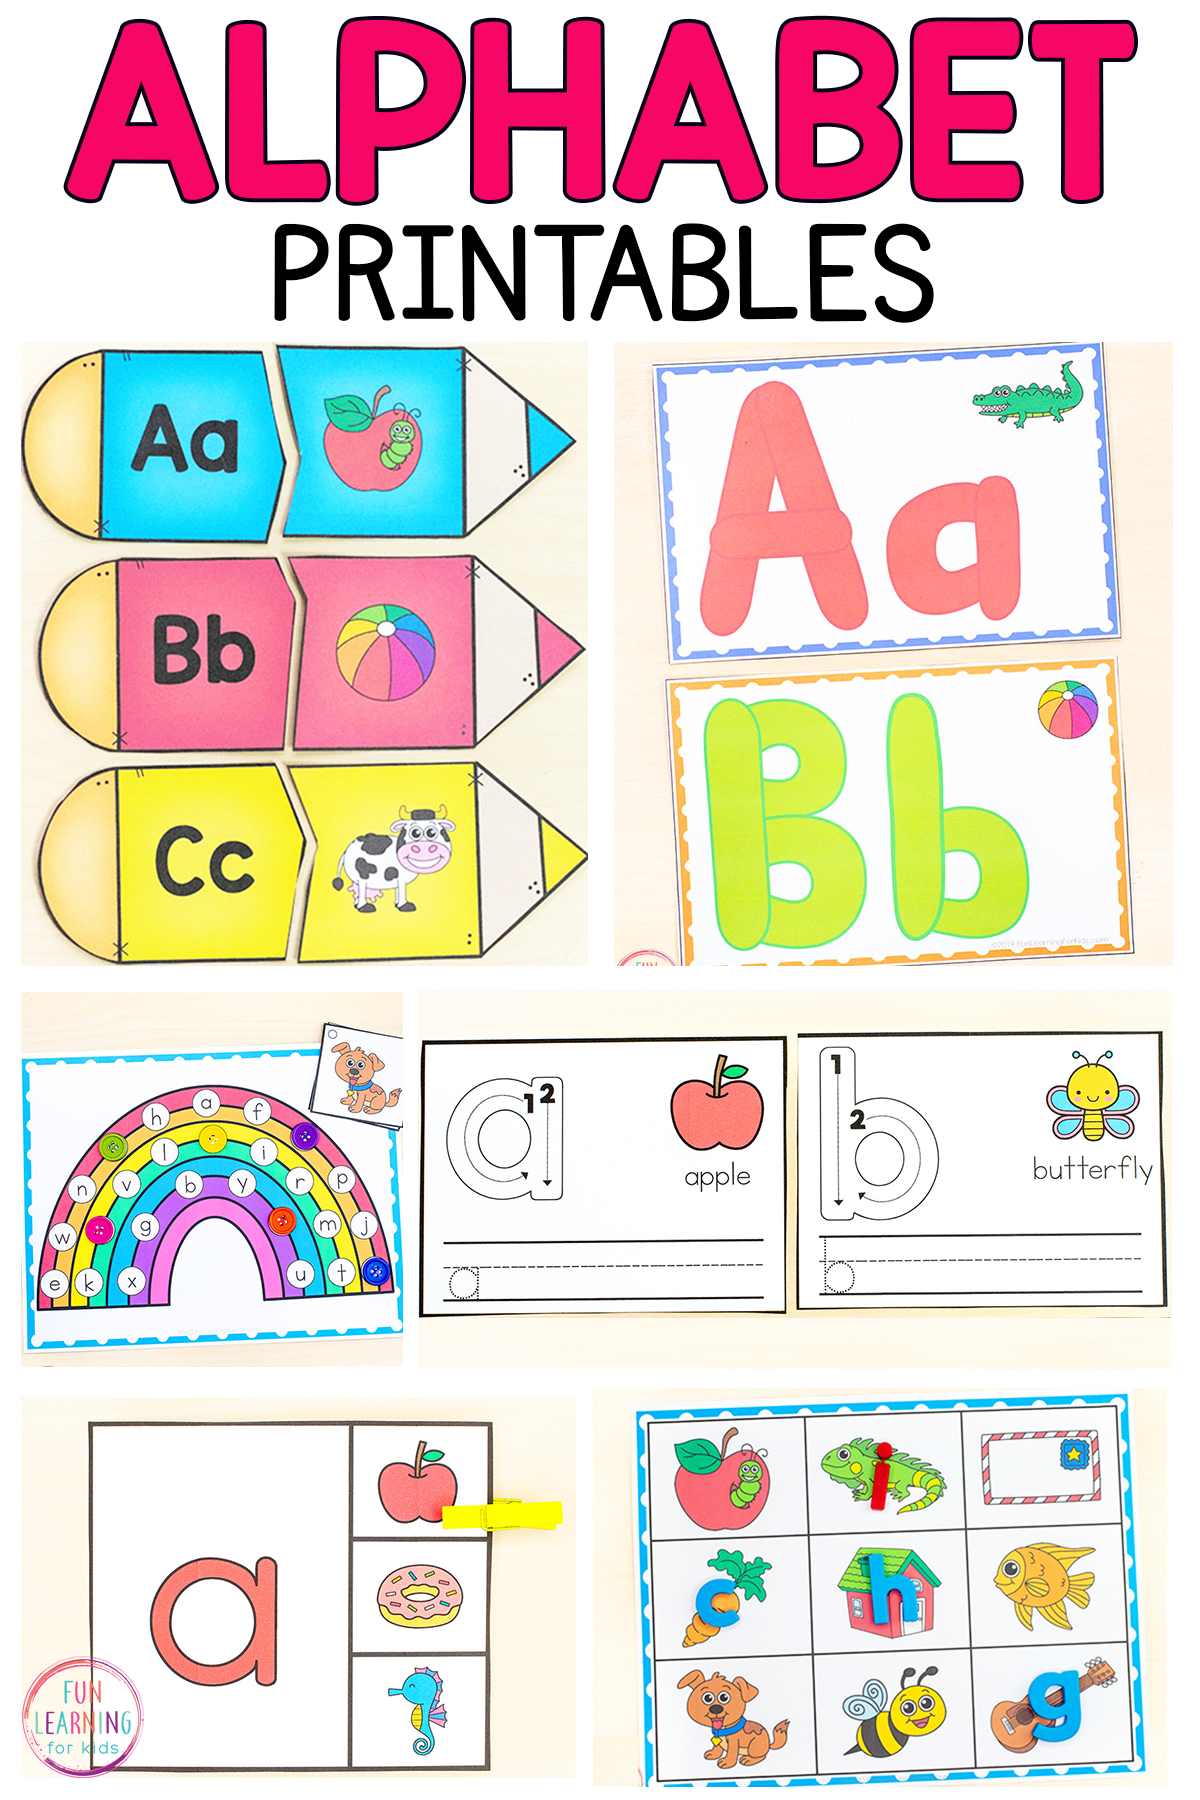 Alphabet Printables for Preschool, Kindergarten and First Grade